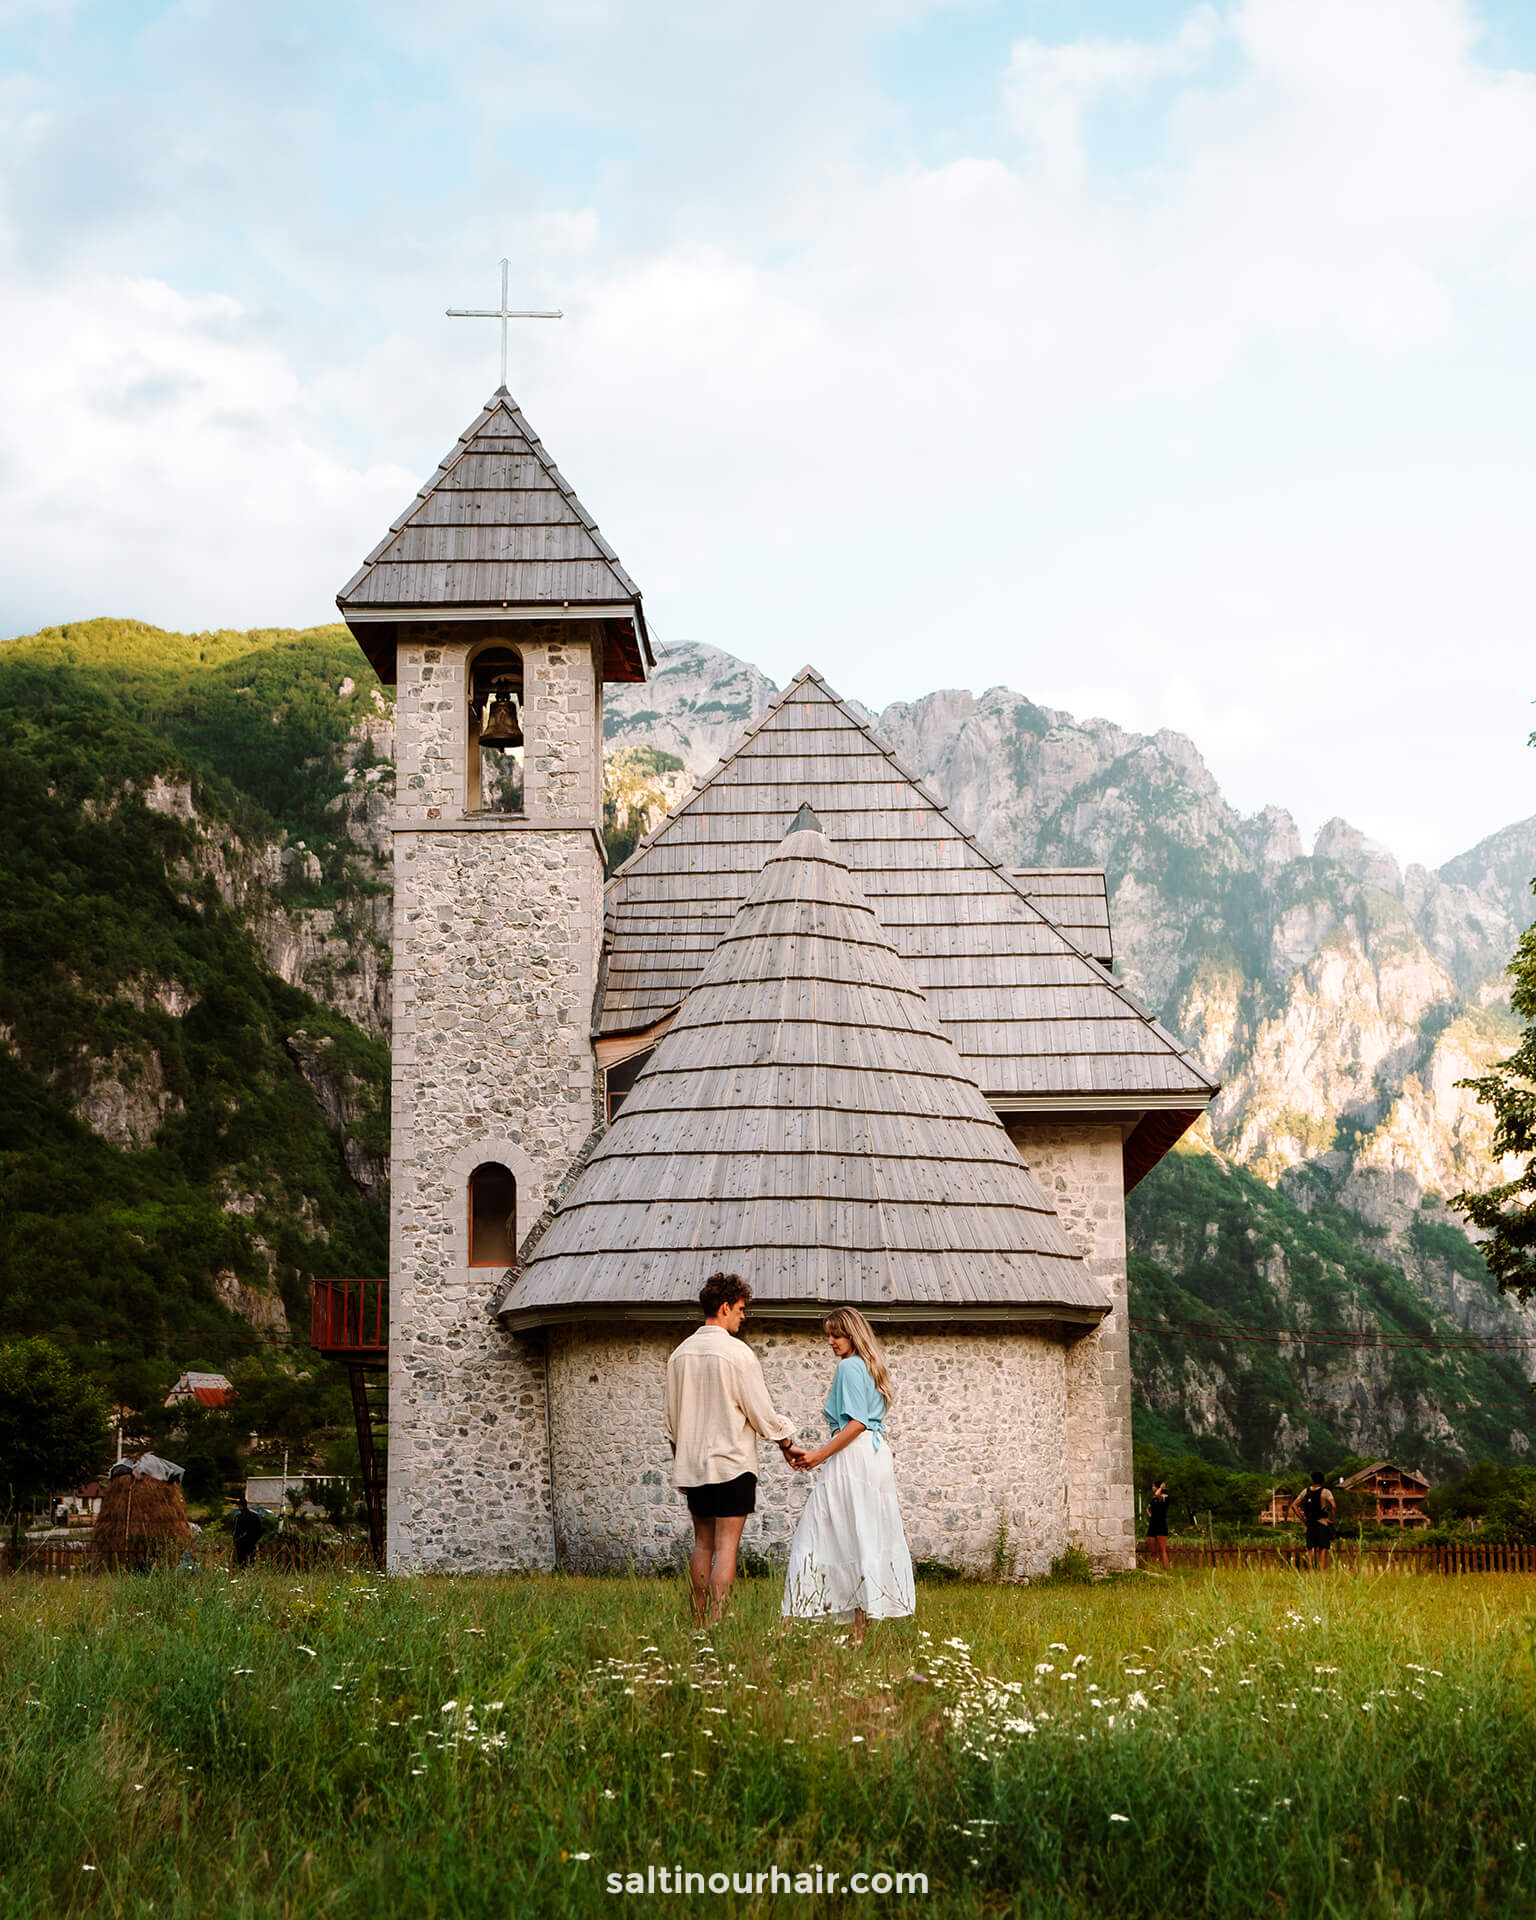 albaniÃ« reisroute de kerk